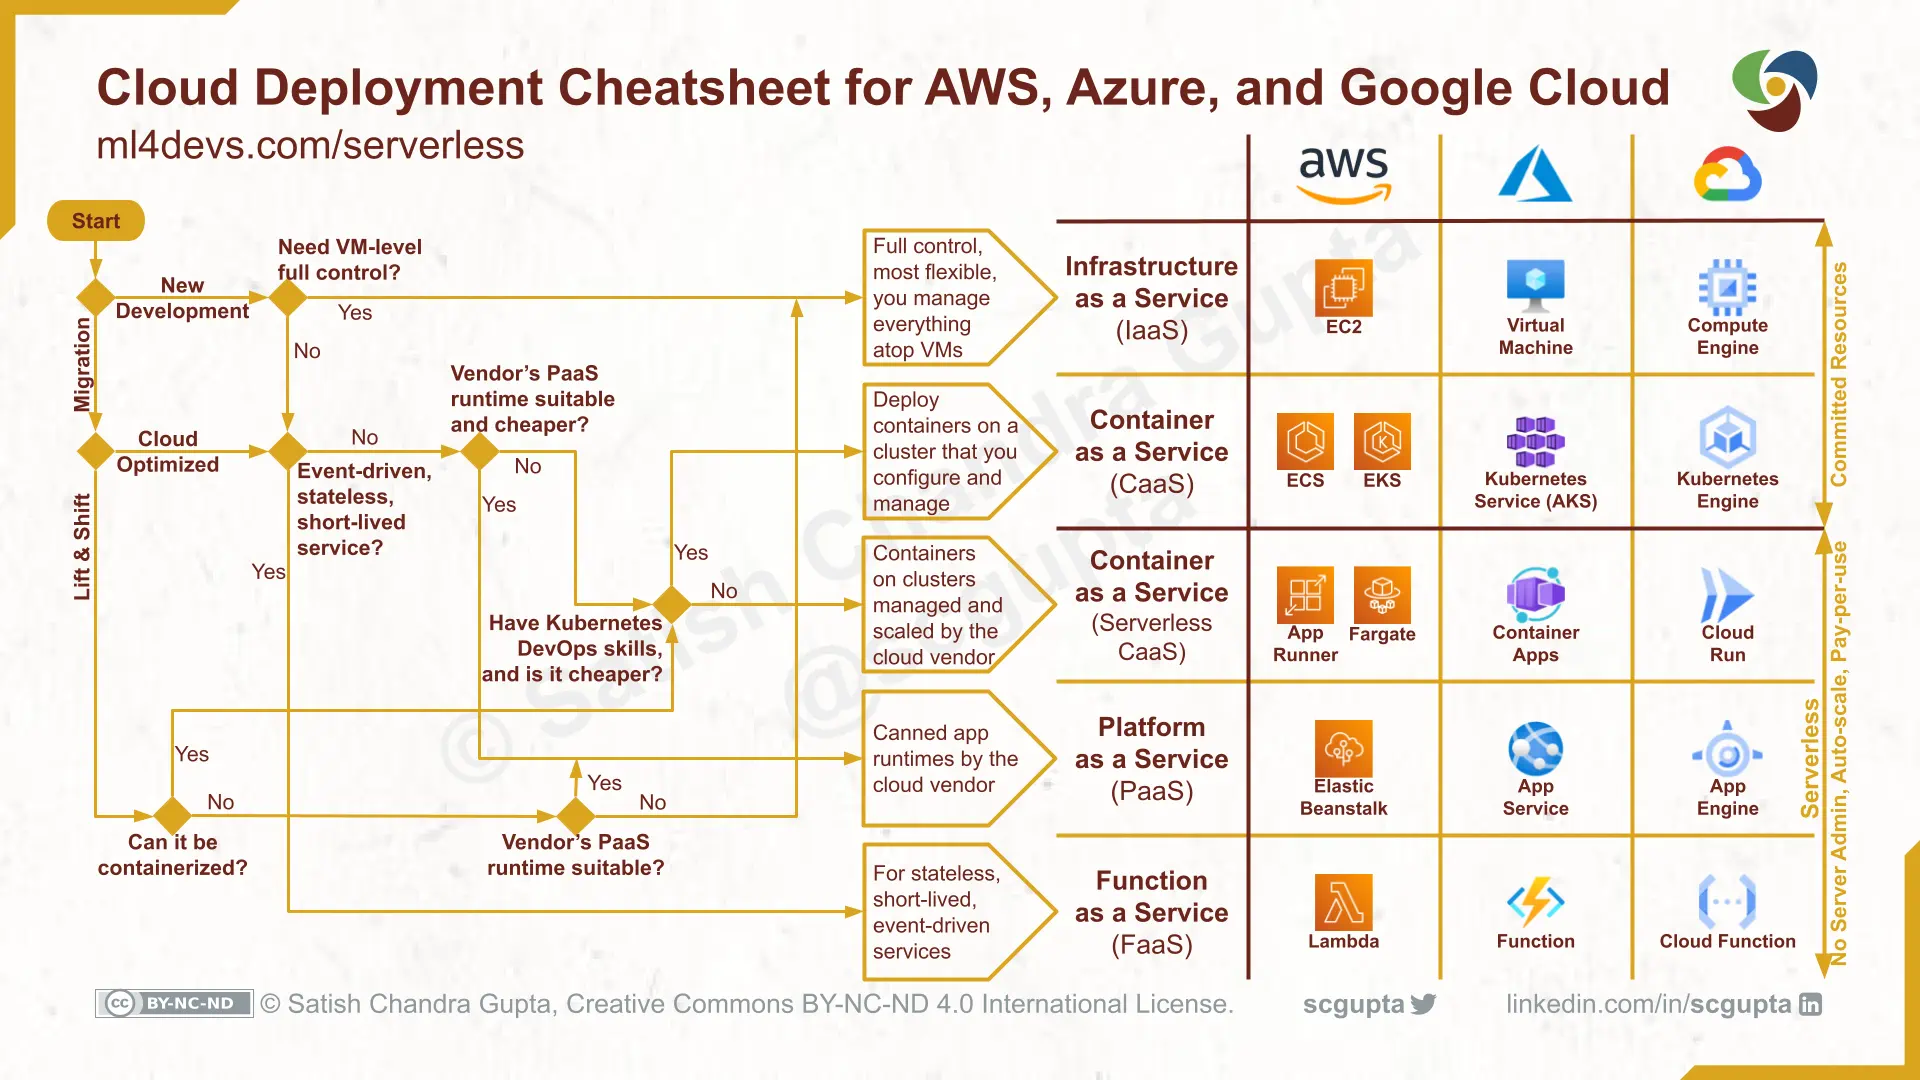 Serverless on AWS vs Azure vs Google Cloud, and decision tree for compute choices for IaaS vs CaaS vs PaaS vs FaaS